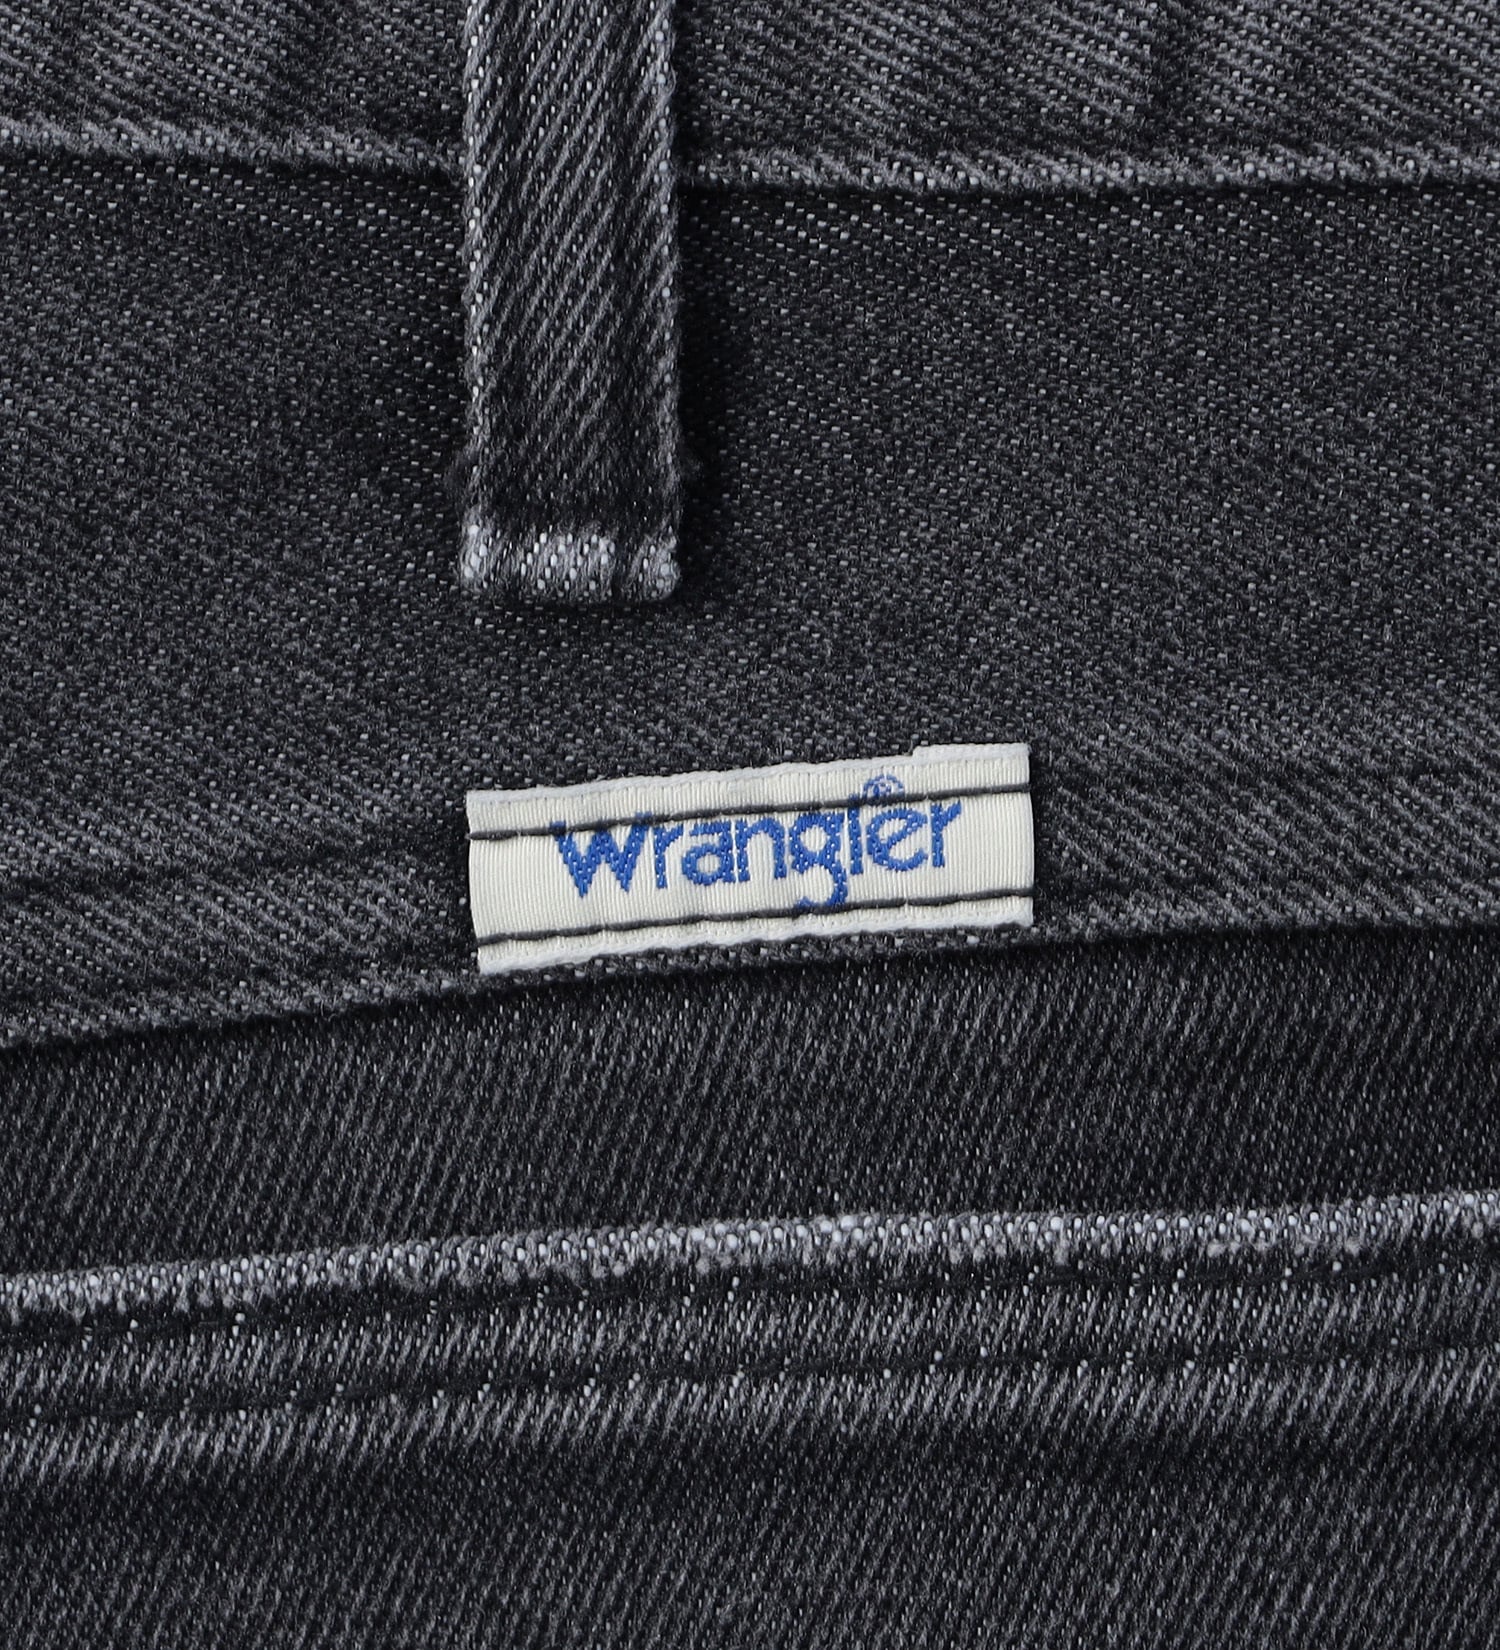 Wrangler(ラングラー)の【WEB別注】WRANGLER WRANCHER/ランチャー デニムフレアードレスパンツ|パンツ/デニムパンツ/メンズ|ブラックデニム